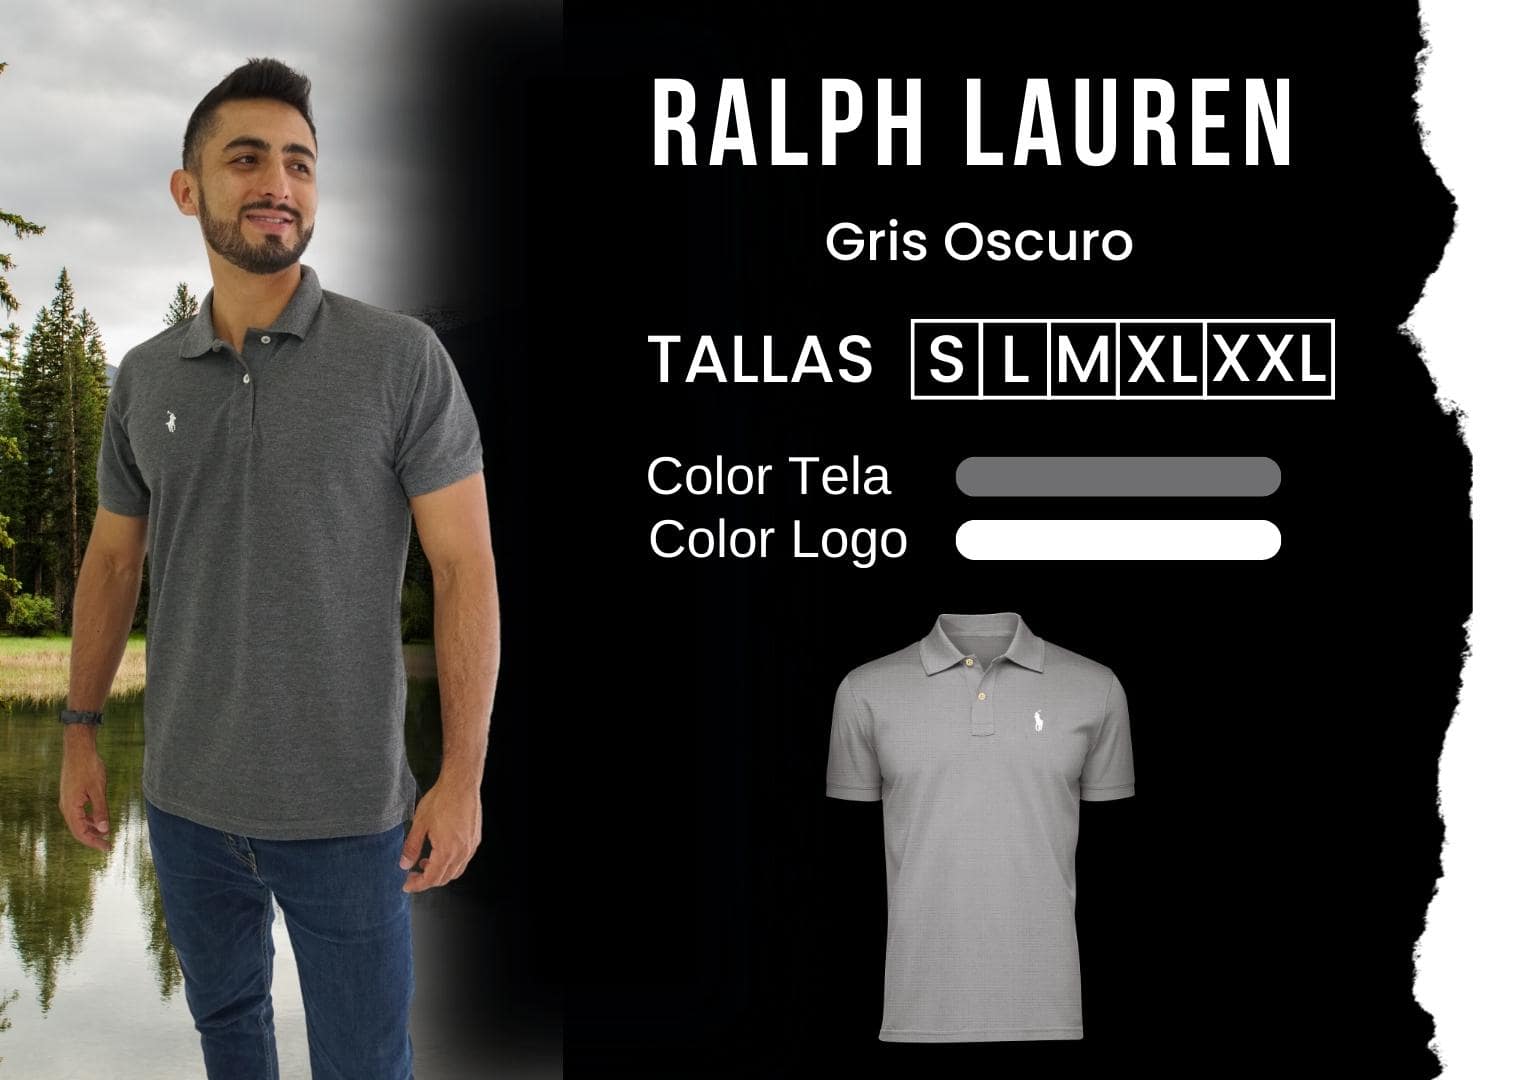 camiseta Ralph Lauren polo hombre tienda olevan color gris oscuro